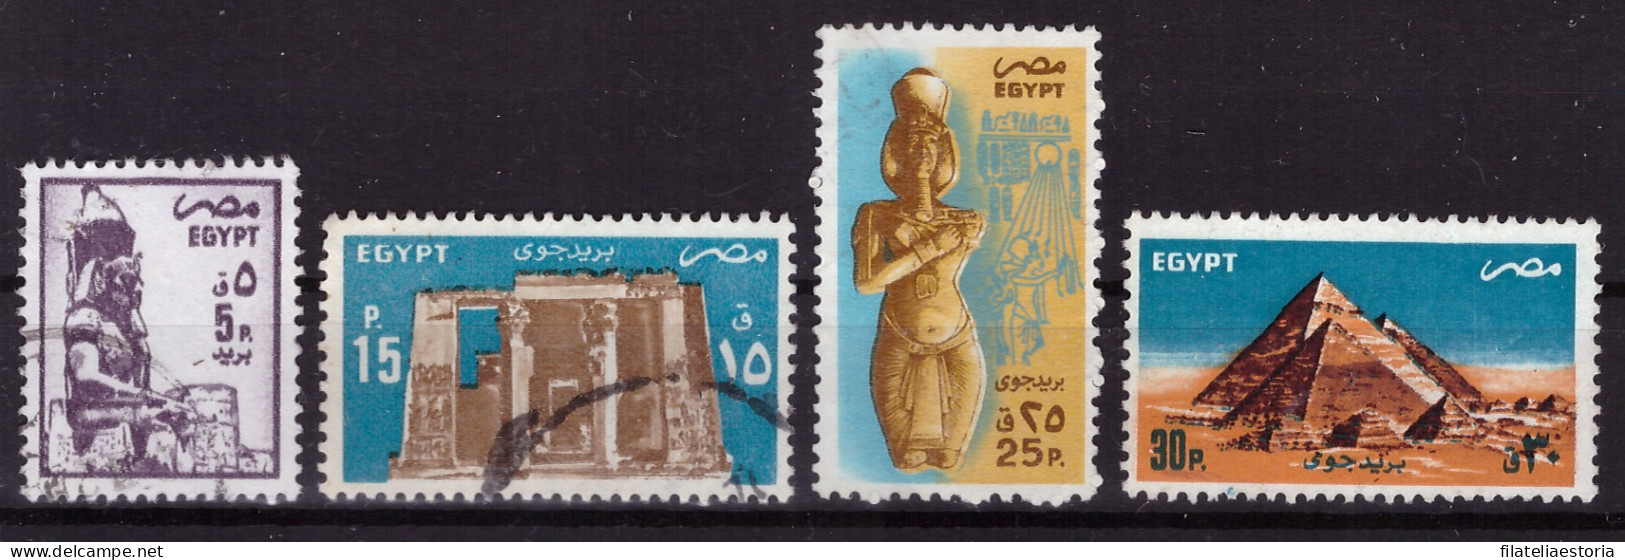 Egypte 1985/1998 - Oblitéré - Monuments - Art - Michel Nr. 1501 1506 1509-1510 (egy361) - Usados